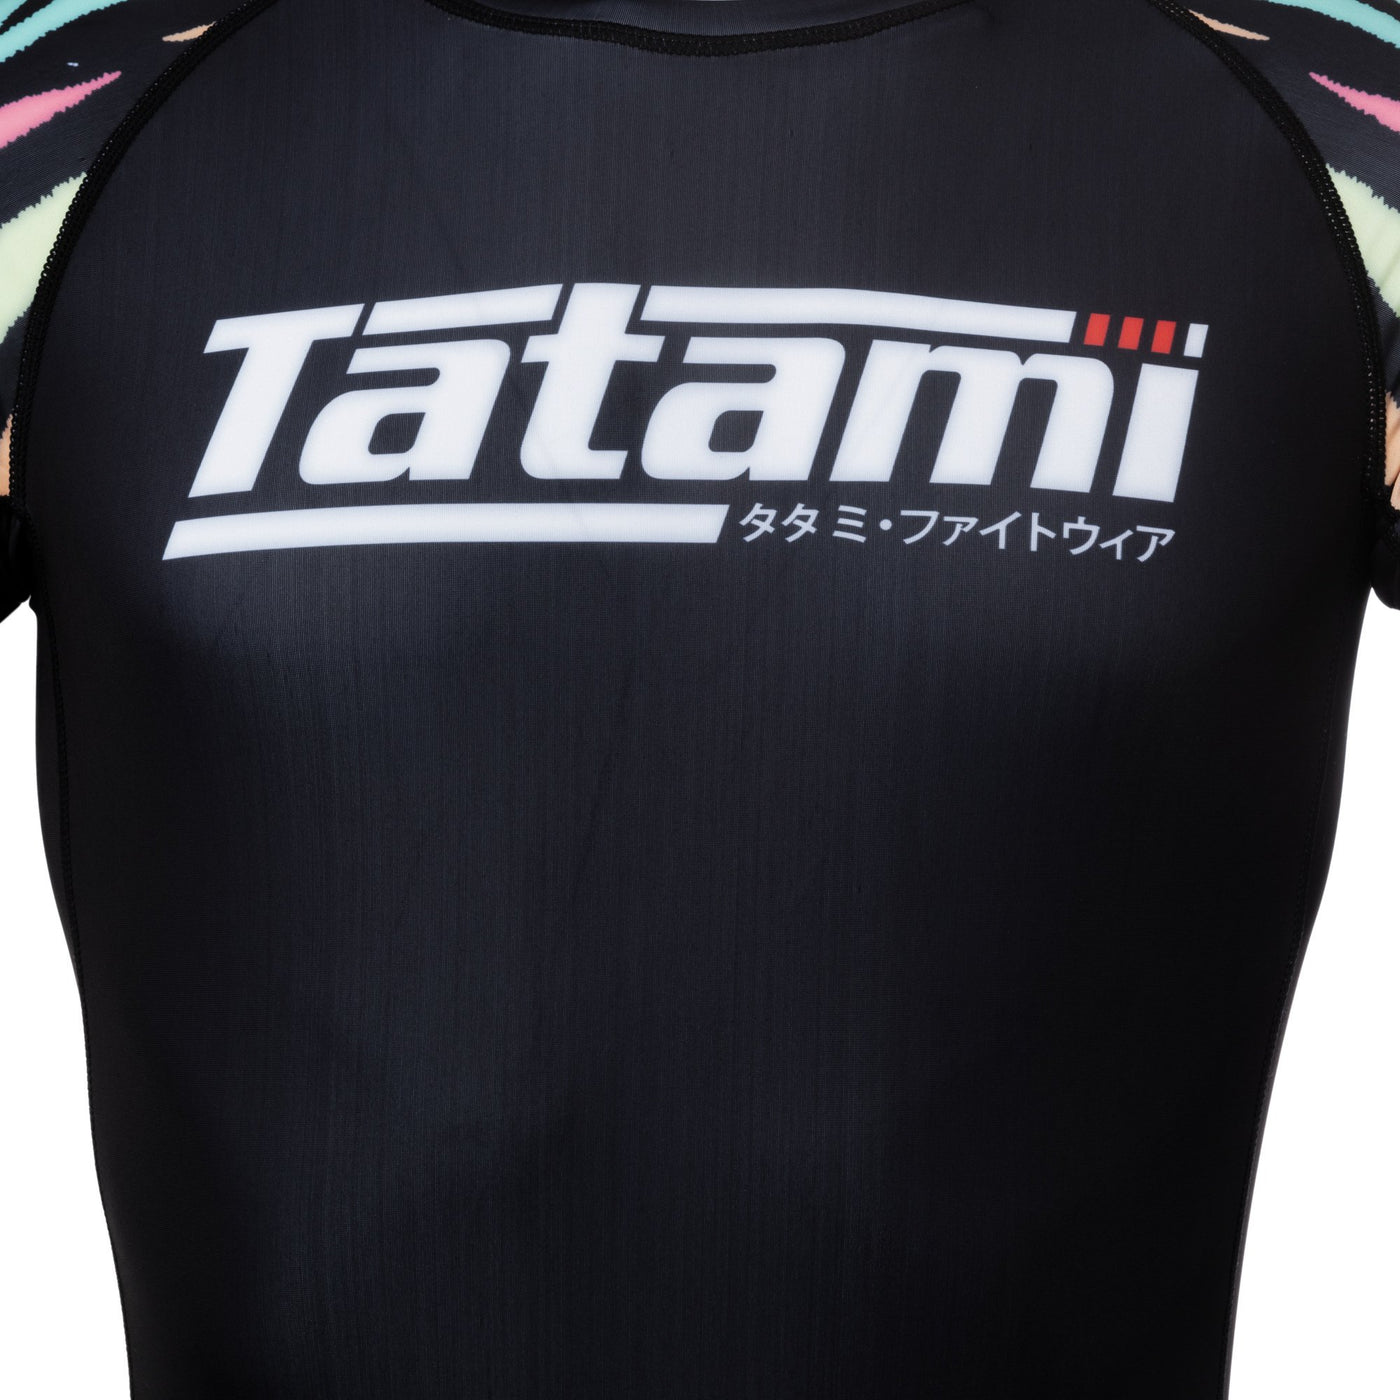 Tatami Recharge Short Sleeve Rashguard - Neon